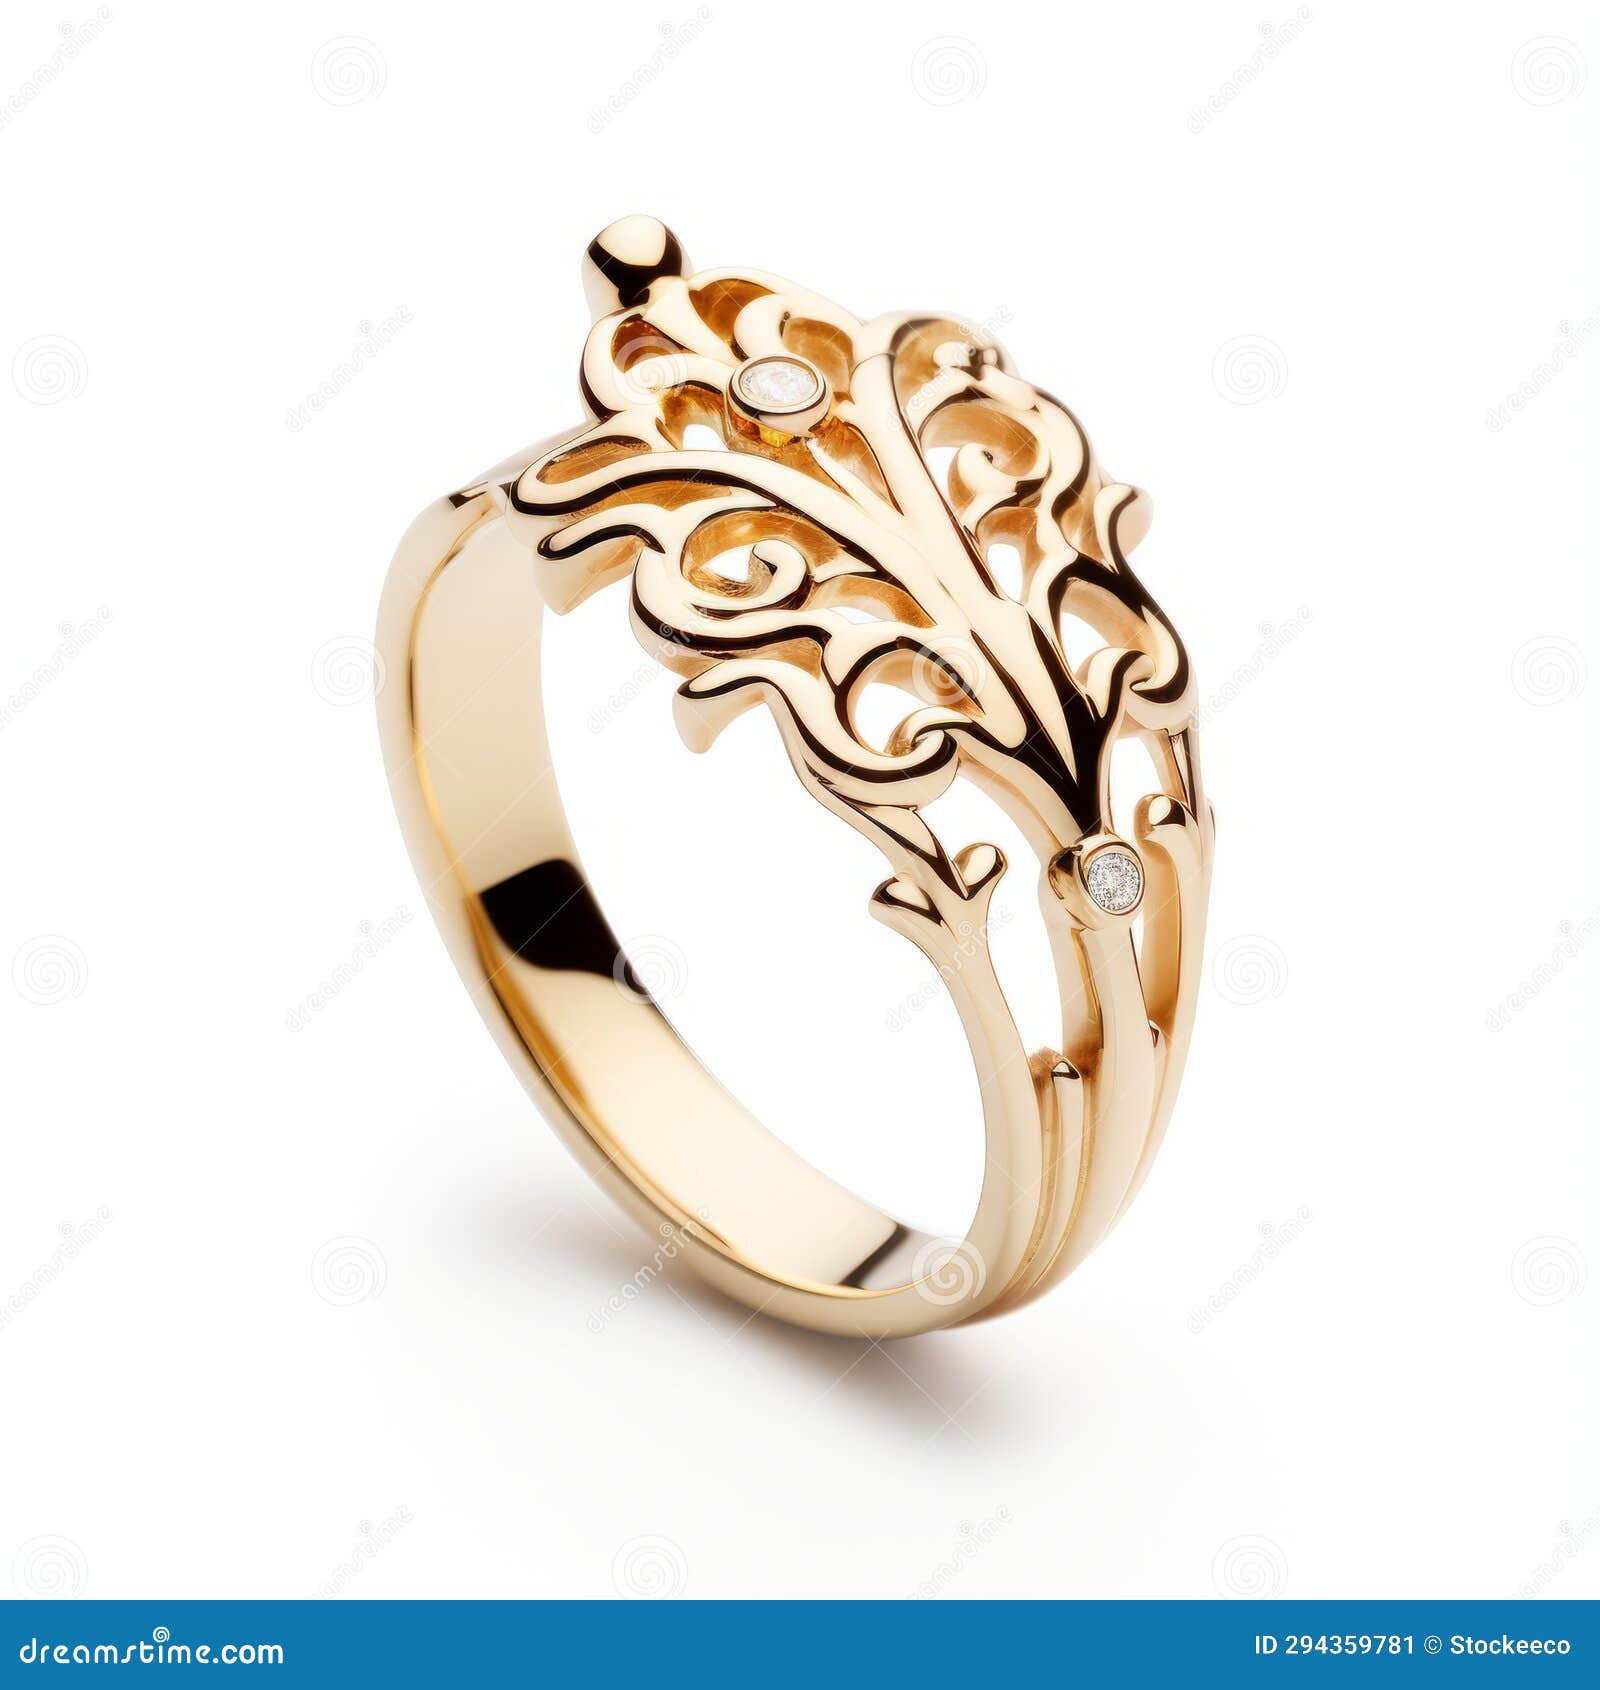 Buy Real Gold Pattern Toe Ring Daily Use Adjustable Bridal Bichiya Design  Online